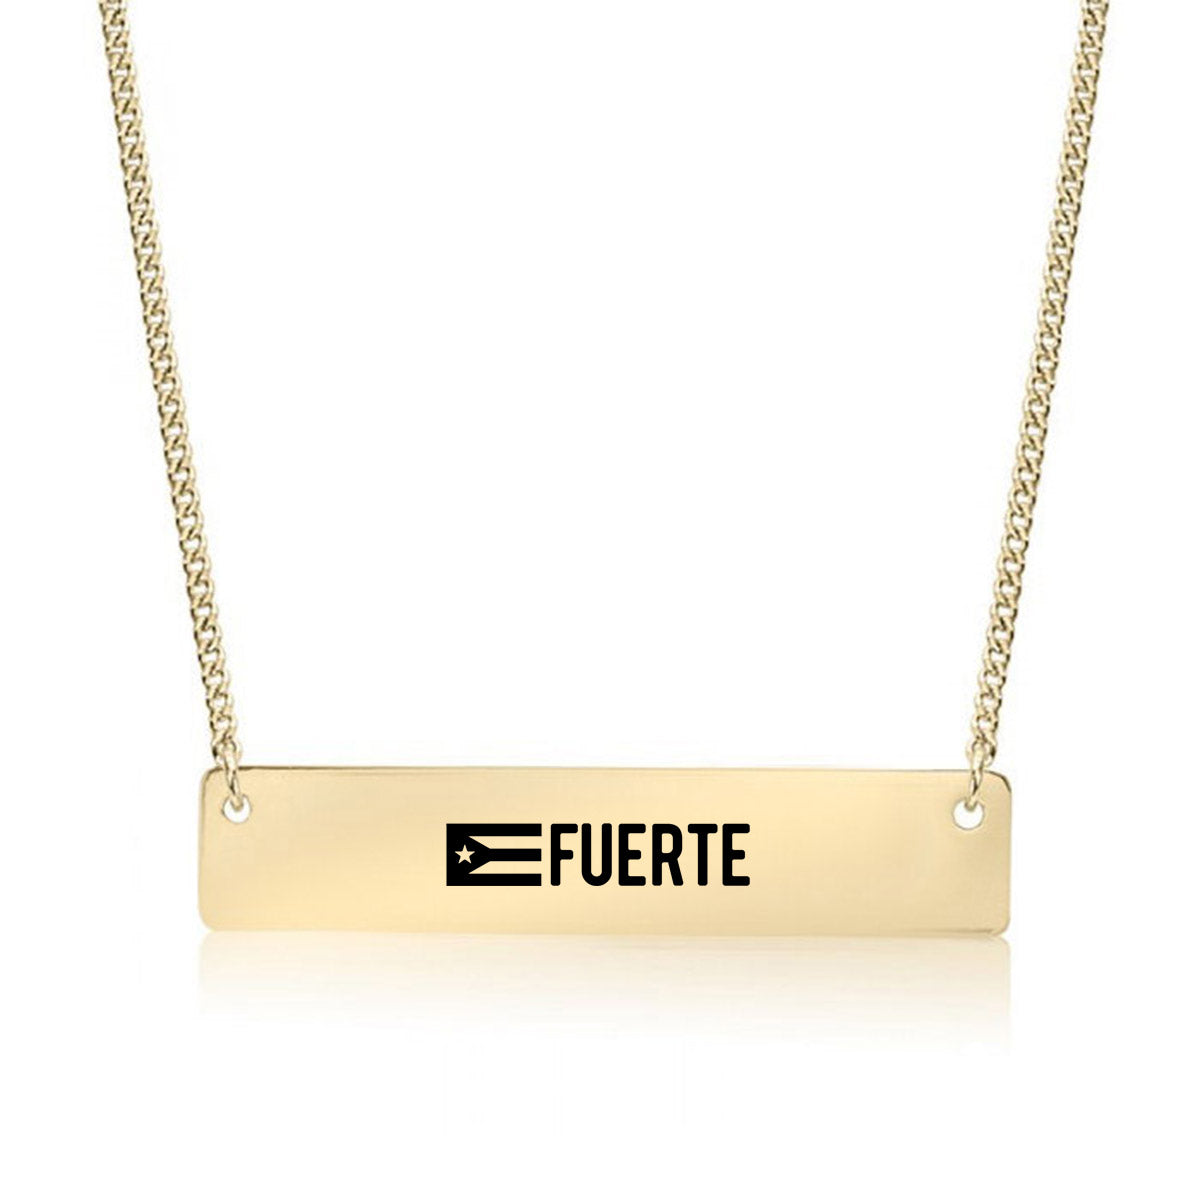 Gold Puerto Rico - Fuerte Bar Necklace